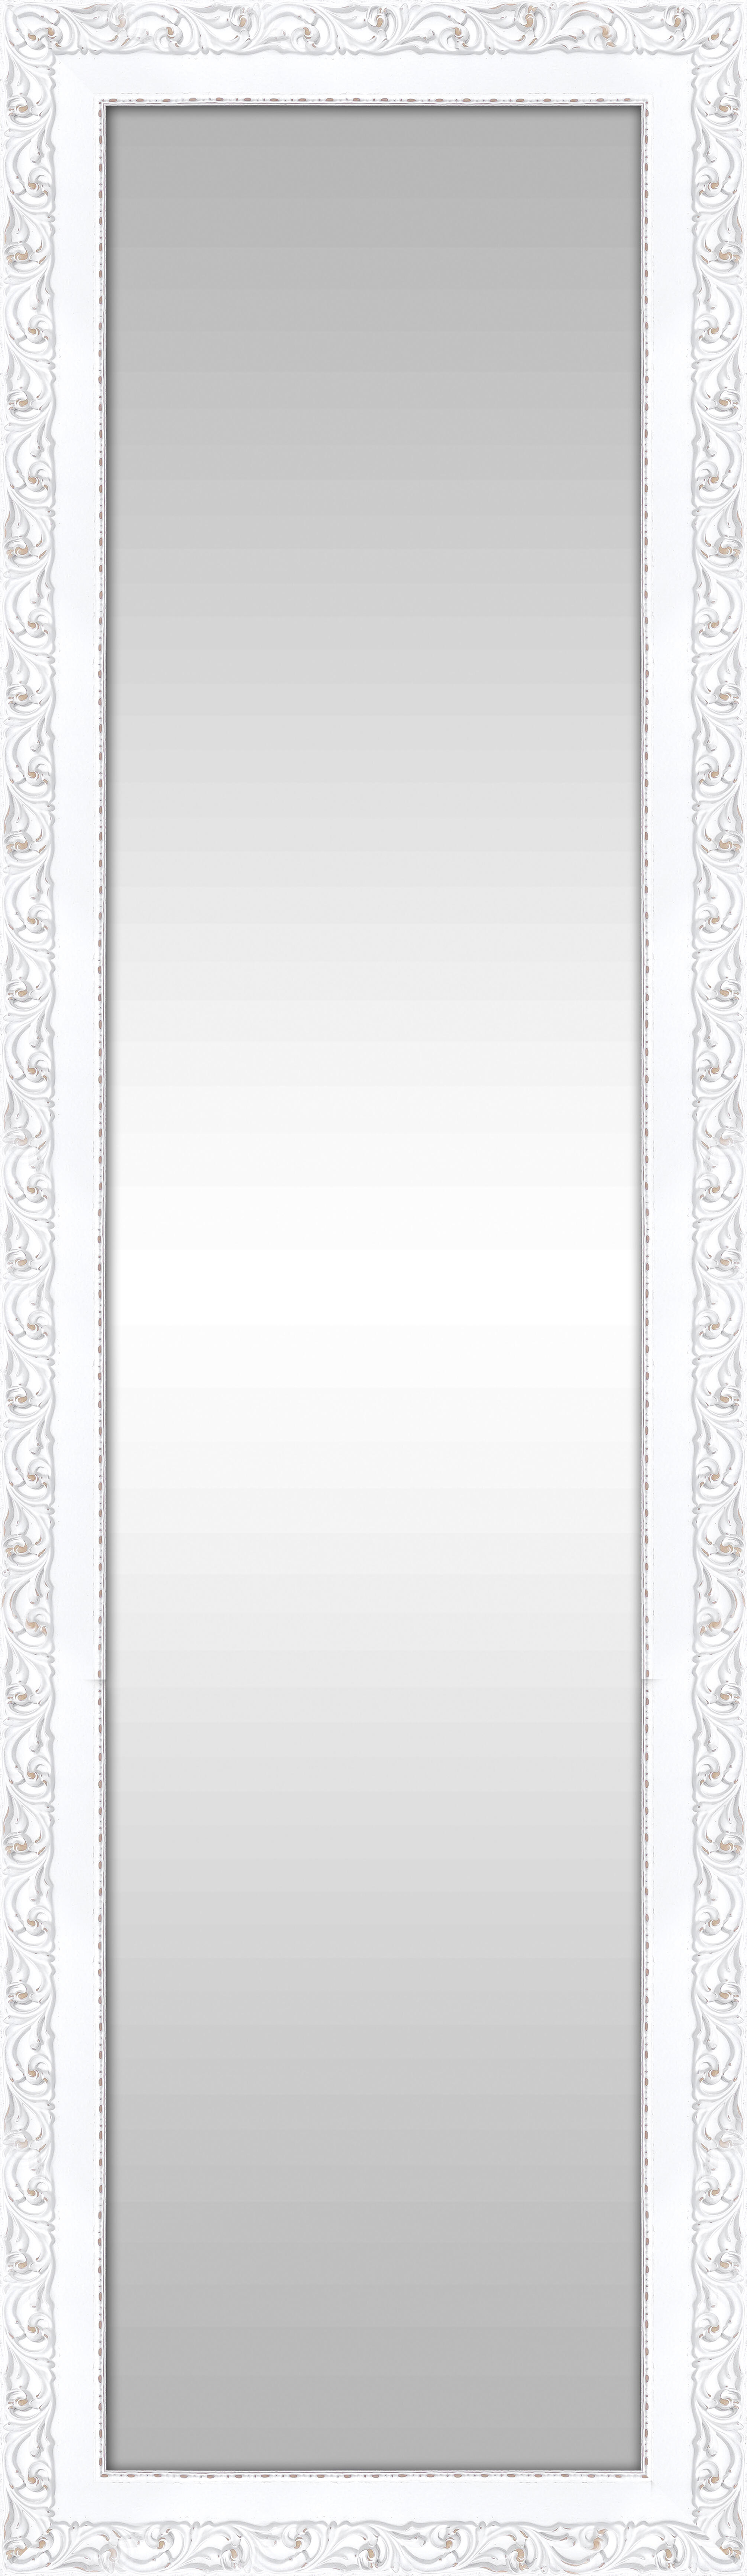 Espejo enmarcado rectangular romantique blanco 170 x 50 cm